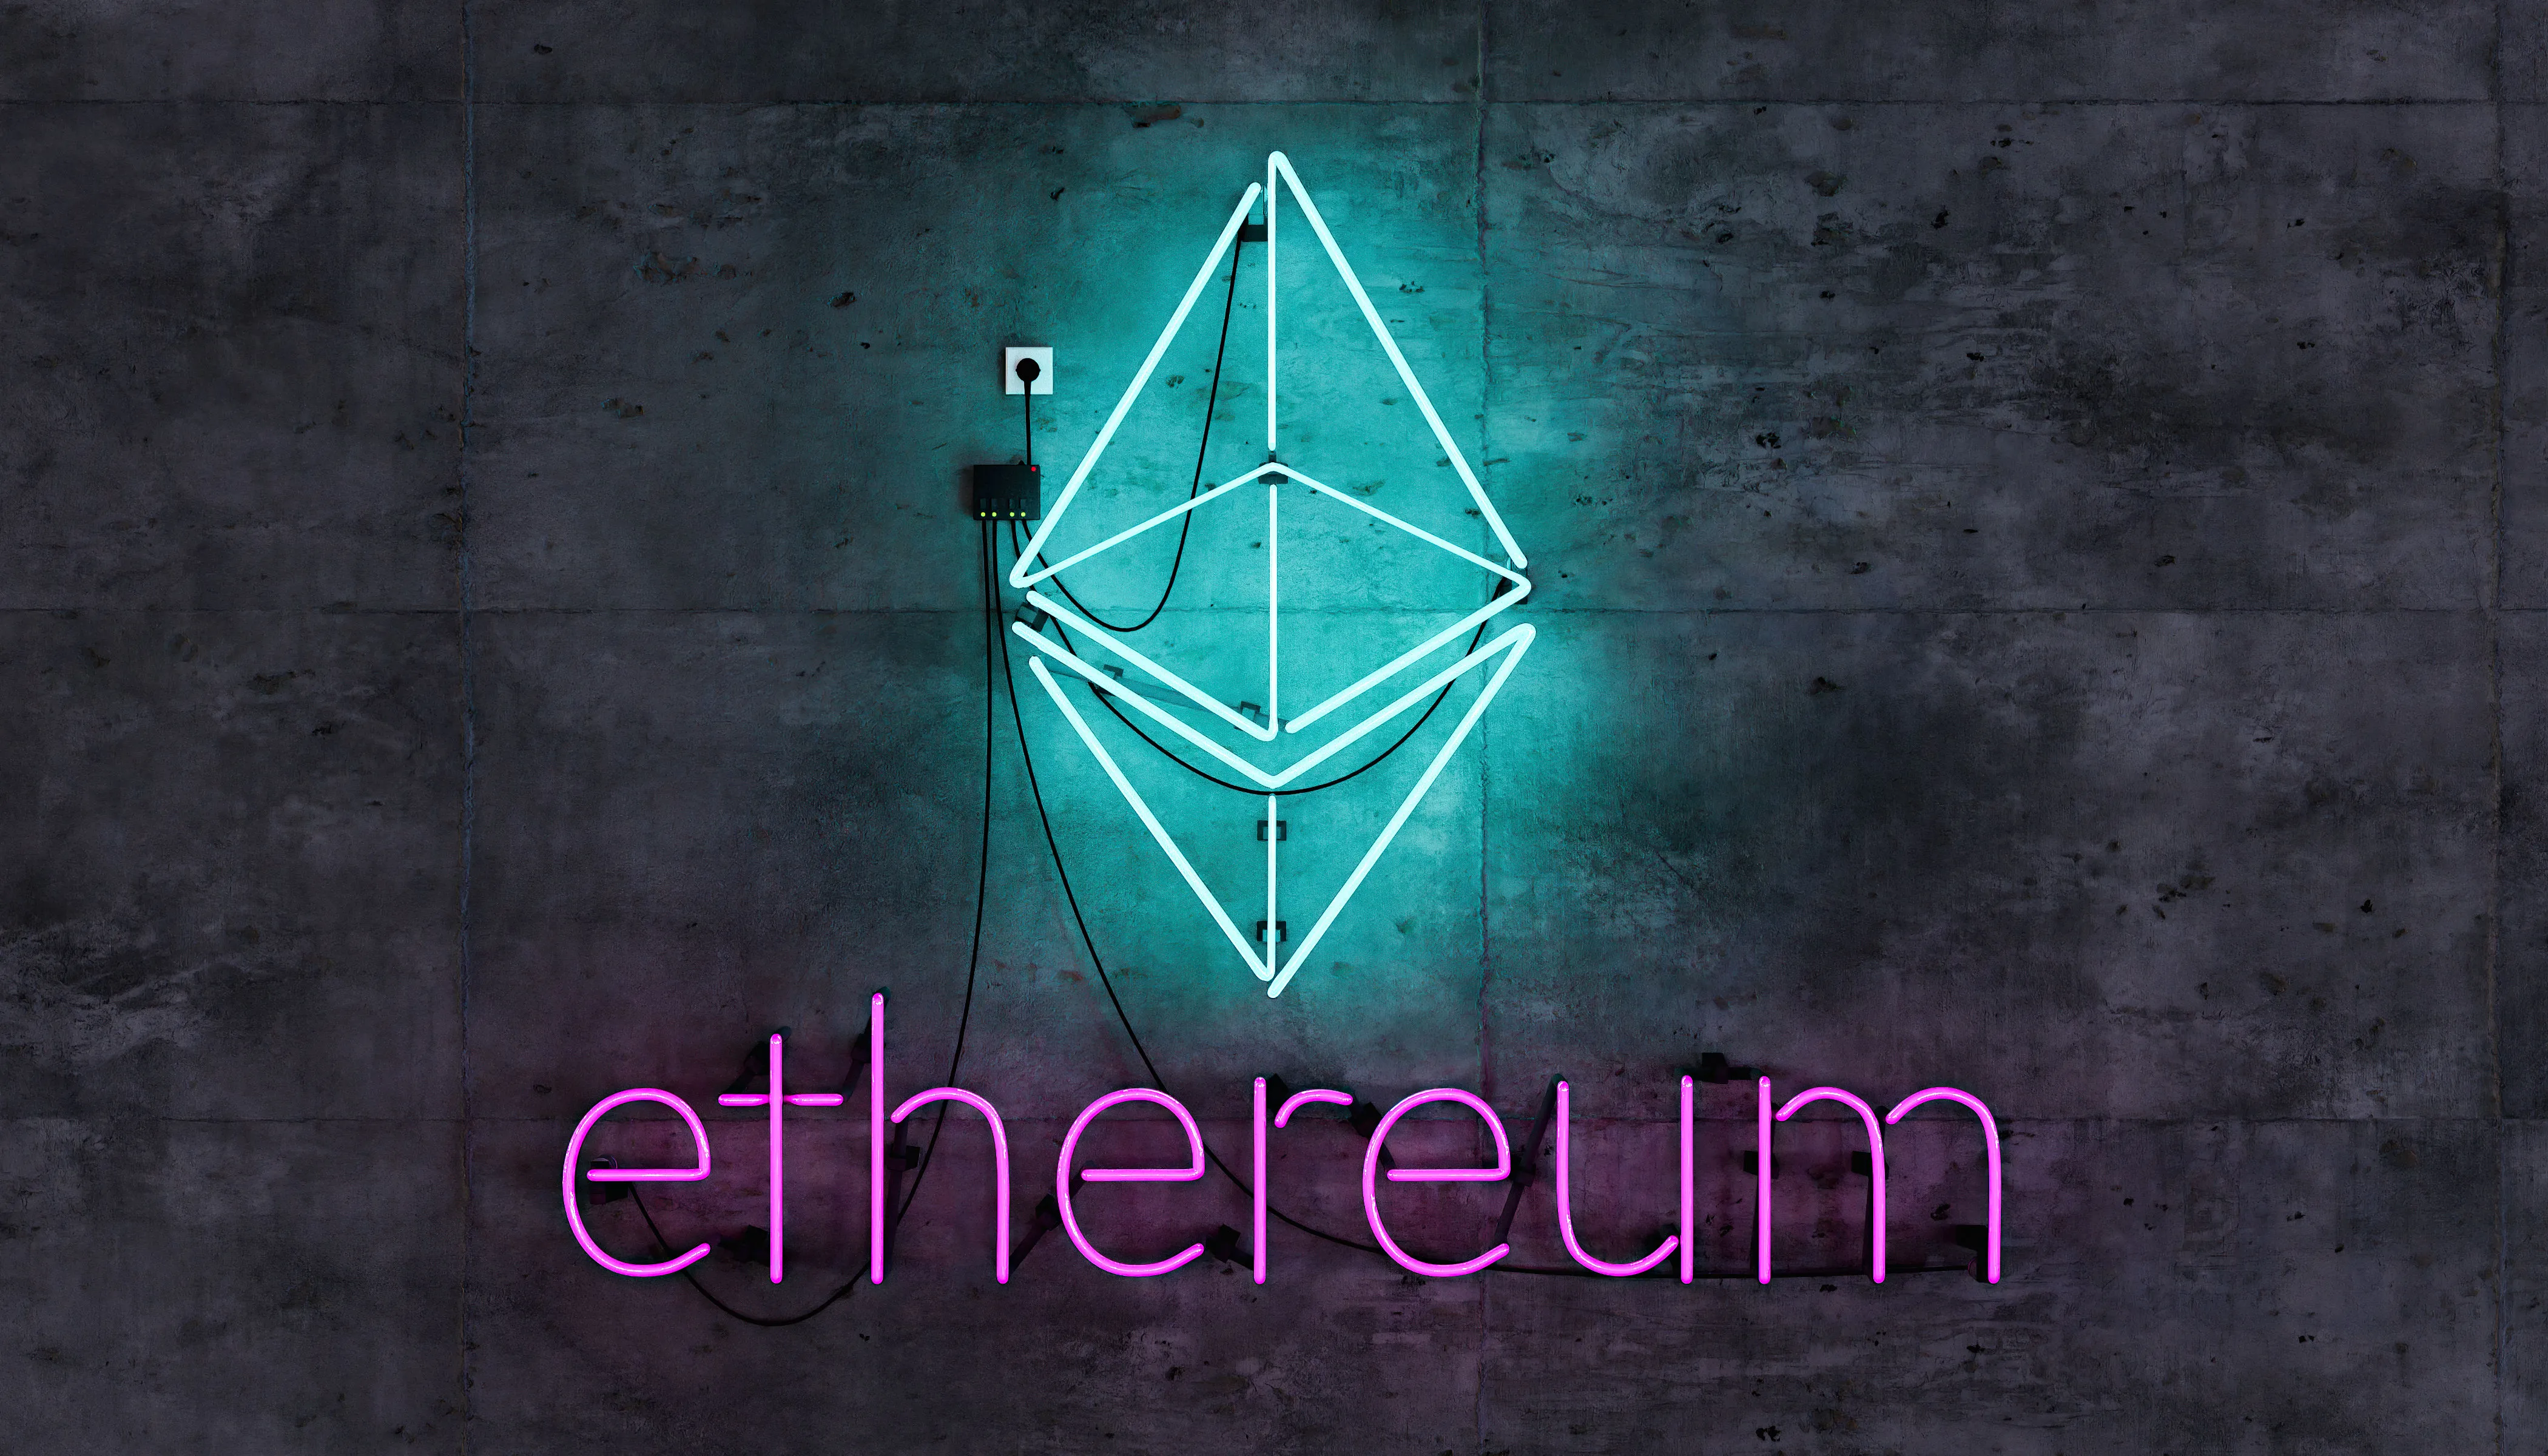 Ethereum symbol neon lamp concrete wall yfxkistpw